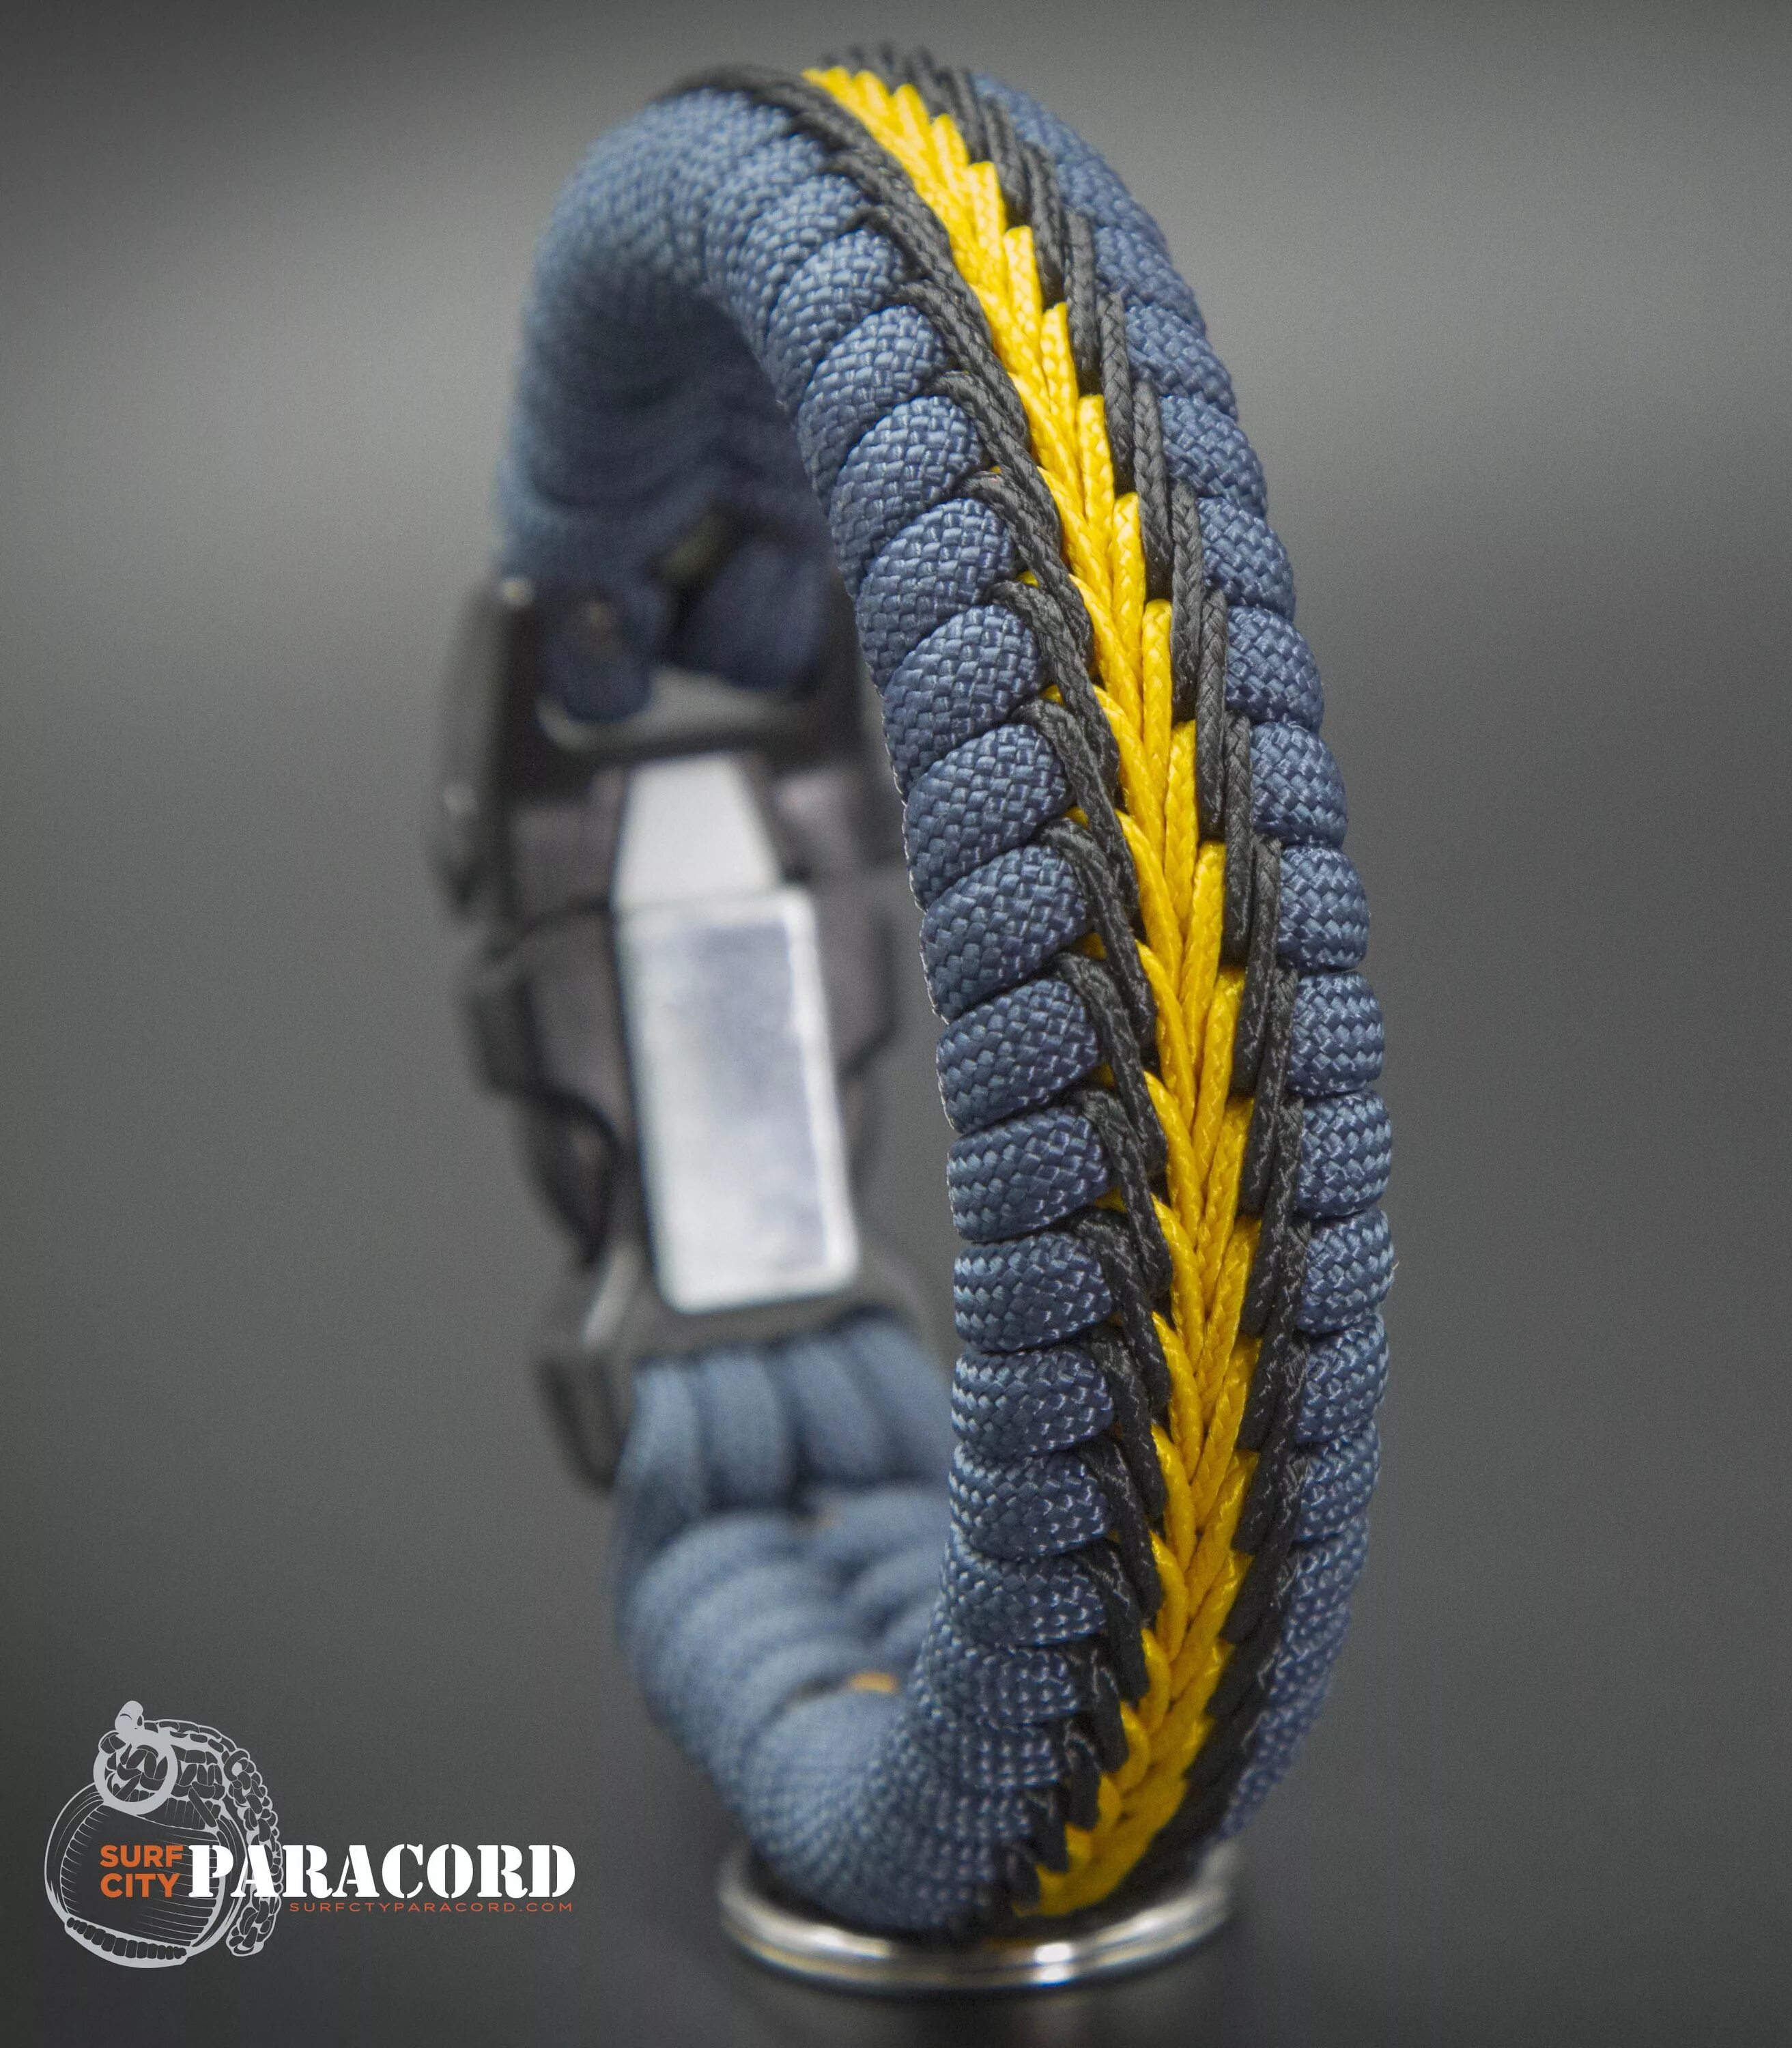 Fishtail Paracord Bracelet. Браслет паракорд 2 мм. Плетение Фиштейл паракорд. Bugout паракорд.